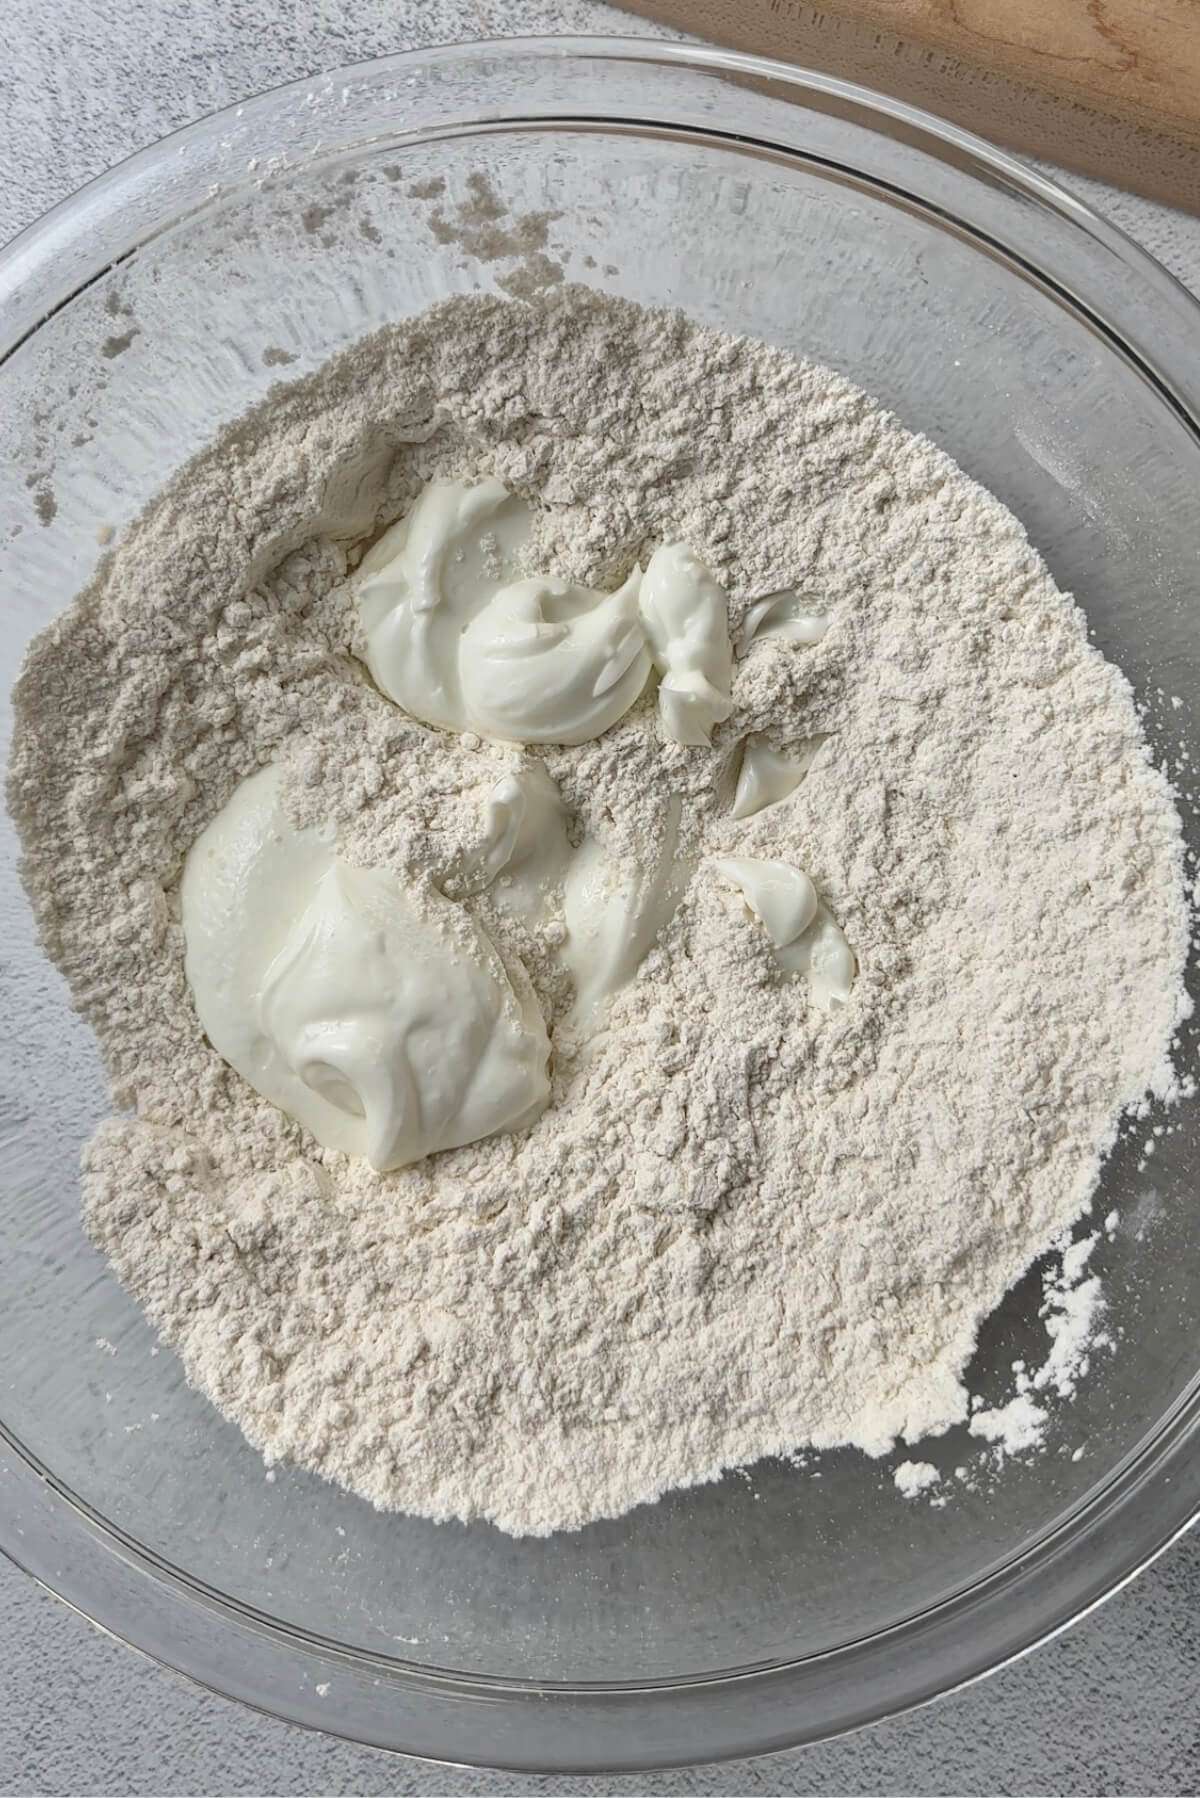 clear mixing bowl with flour, baking powder, salt, and greek yogurt